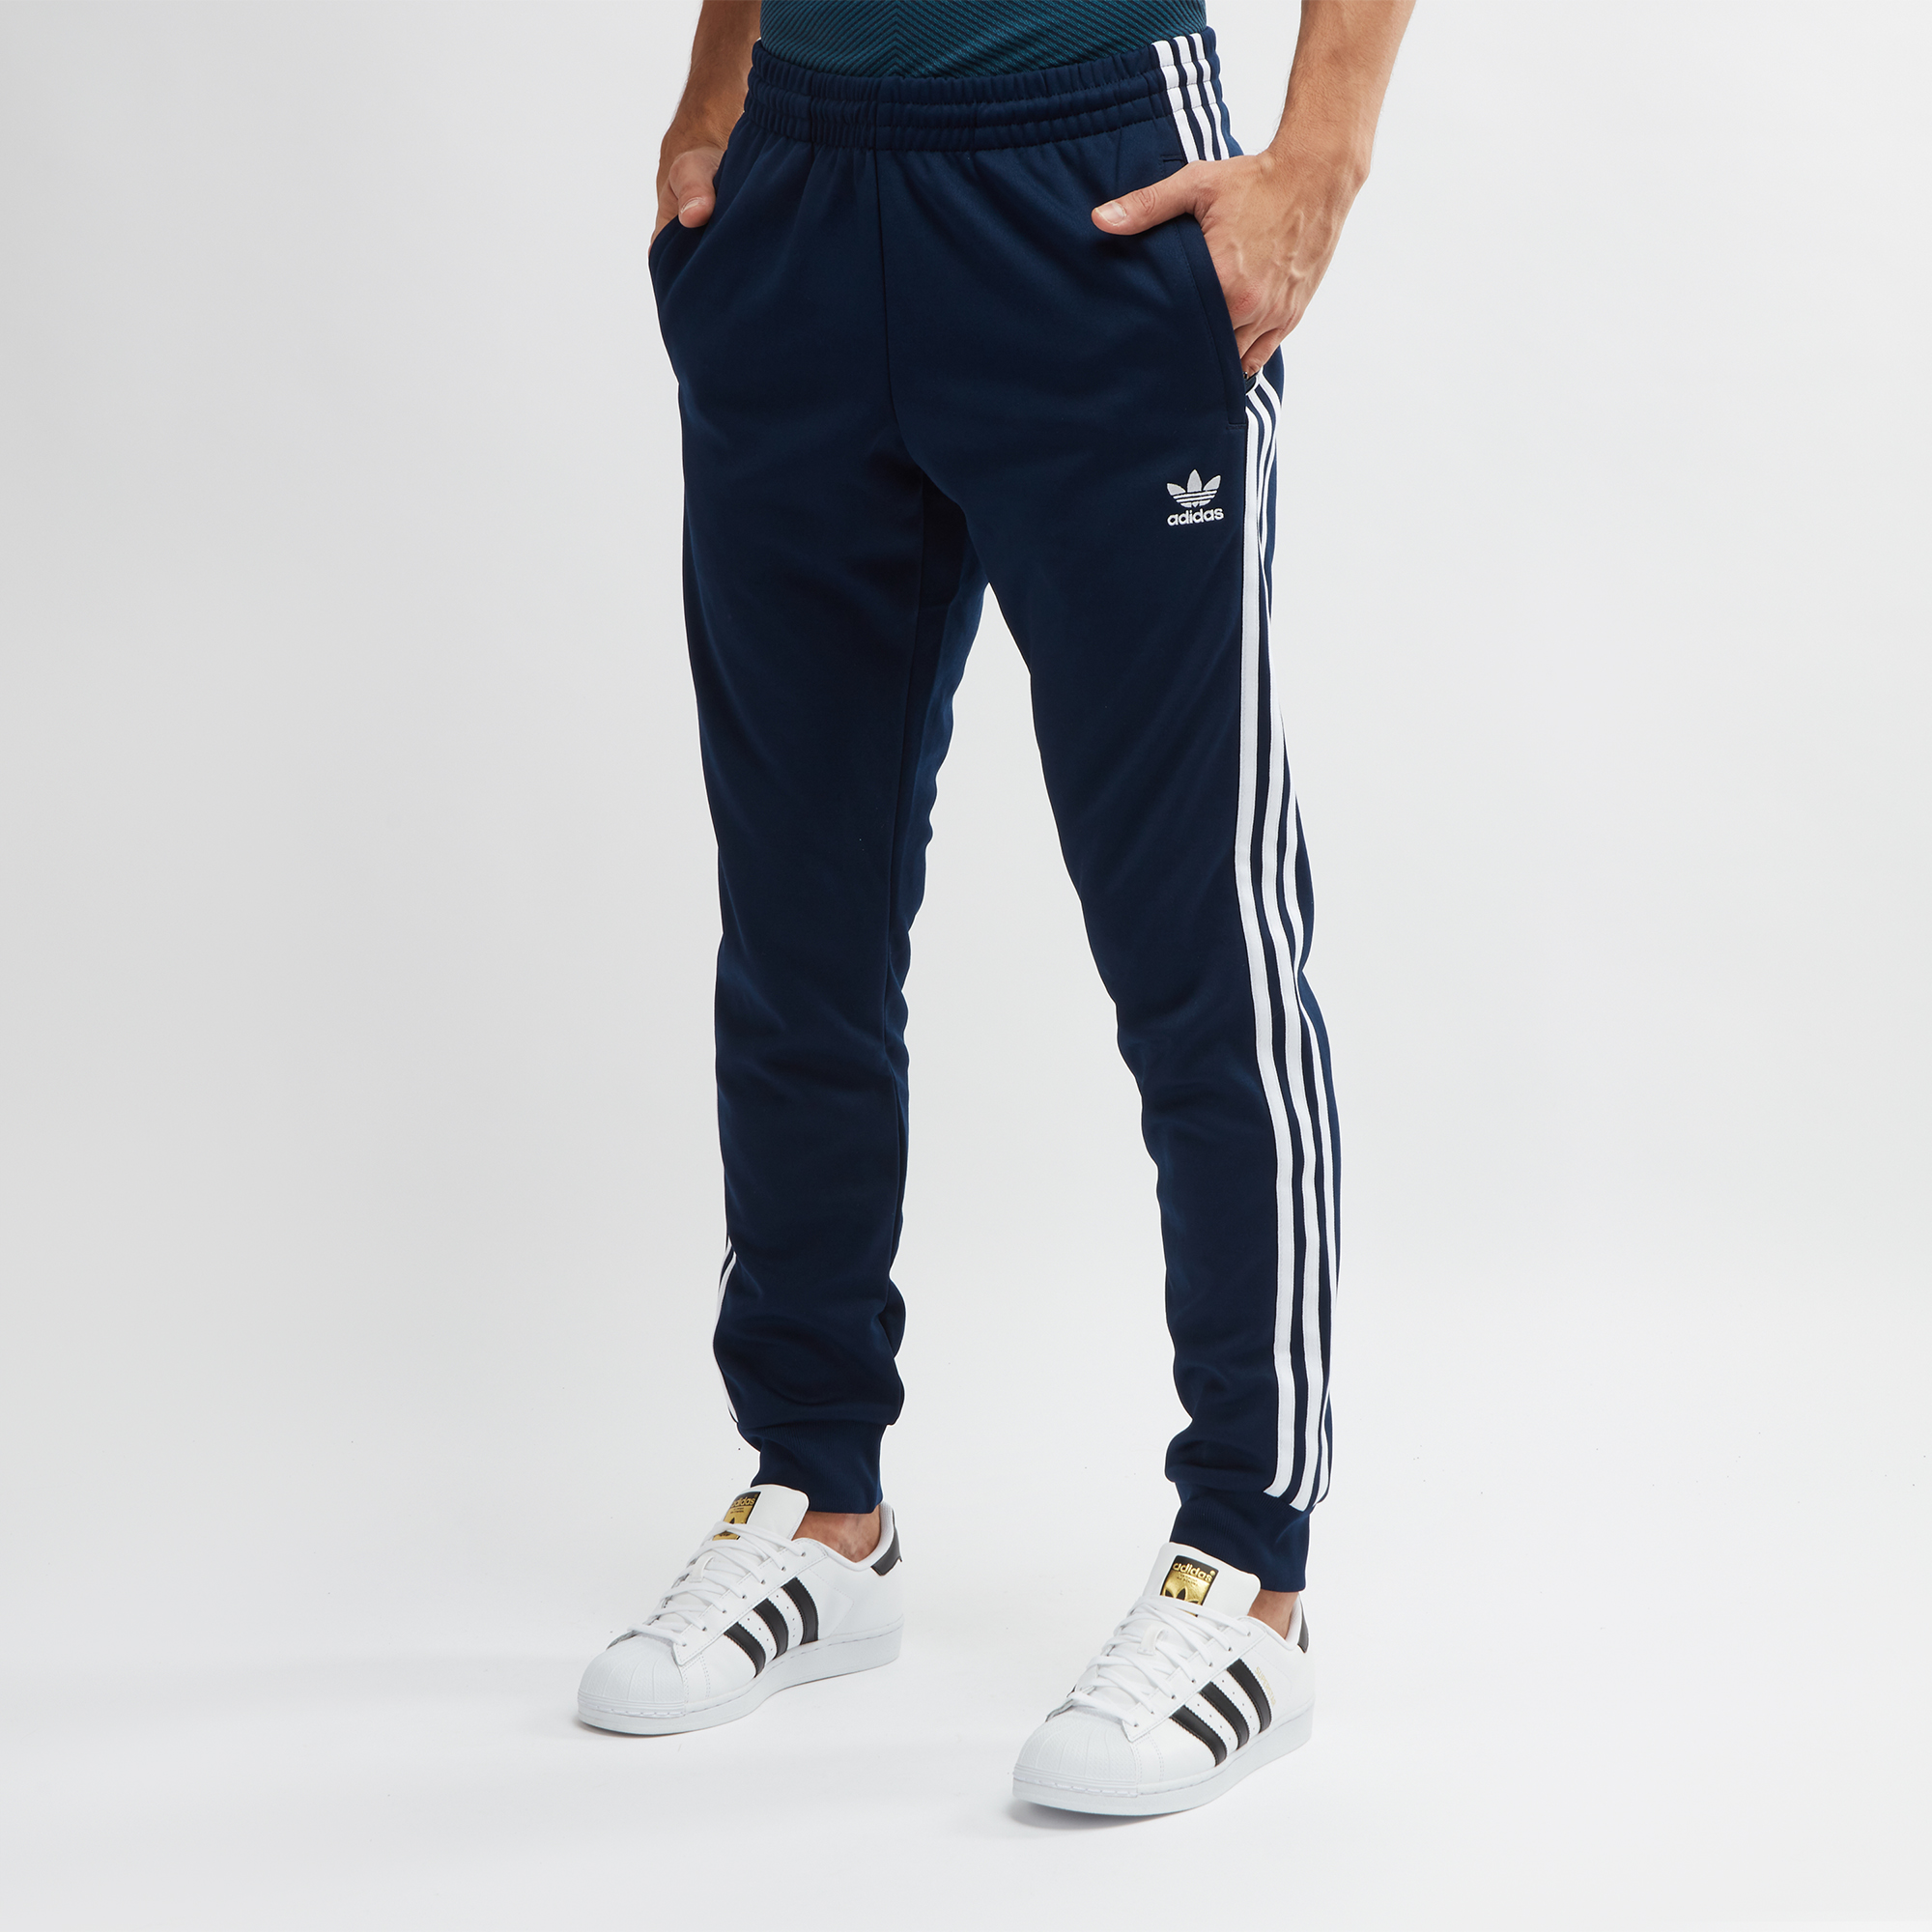 Blue adidas Originals SST Track Pants | Track Pants | Pants | Clothing